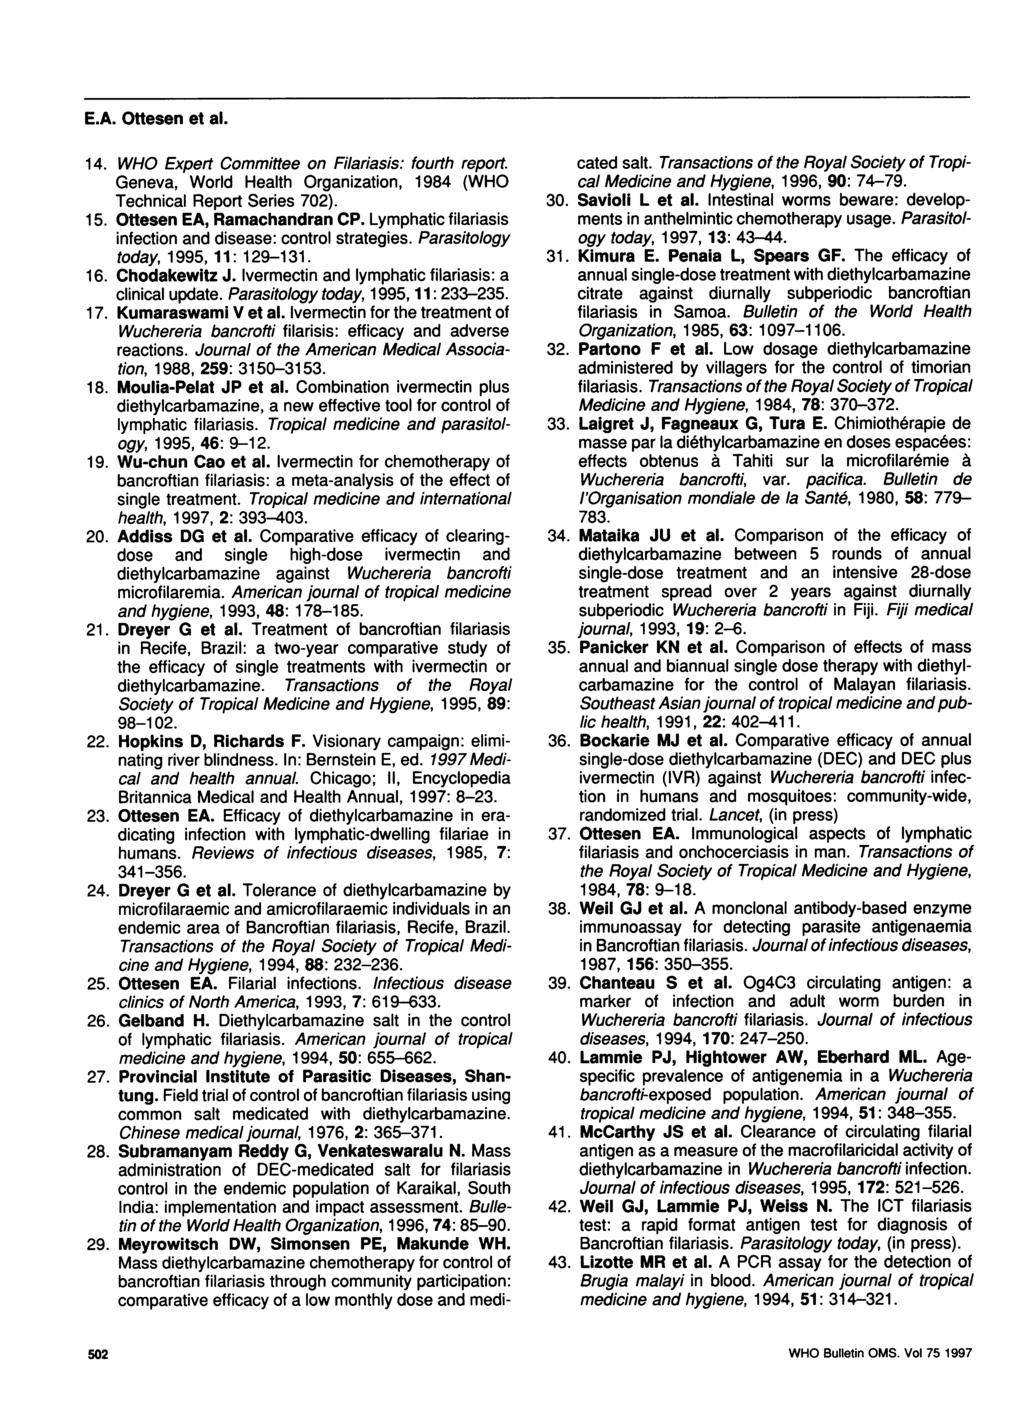 E.A. Ottesen et al. 14. WHO Expert Committee on Filariasis: fourth report. Geneva, World Health Organization, 1984 (WHO Technical Report Series 702). 15. Ottesen EA, Ramachandran CP.